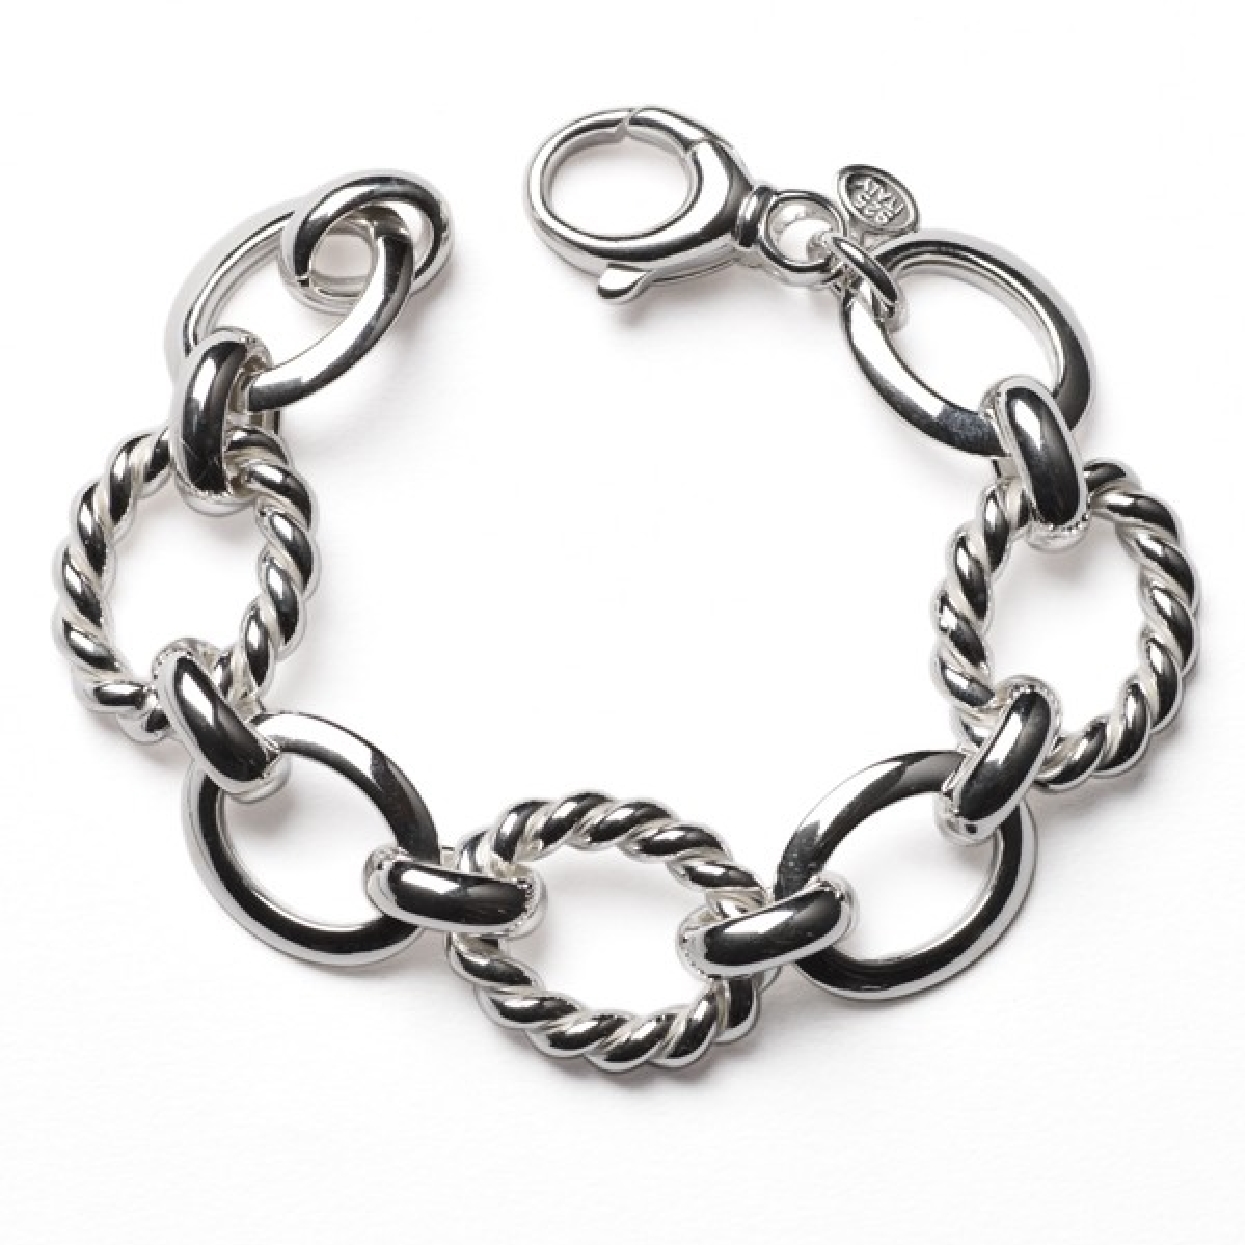 Southern Gates Sterling Silver Contemporary Katherine Twist Link Bracelet

KAR545